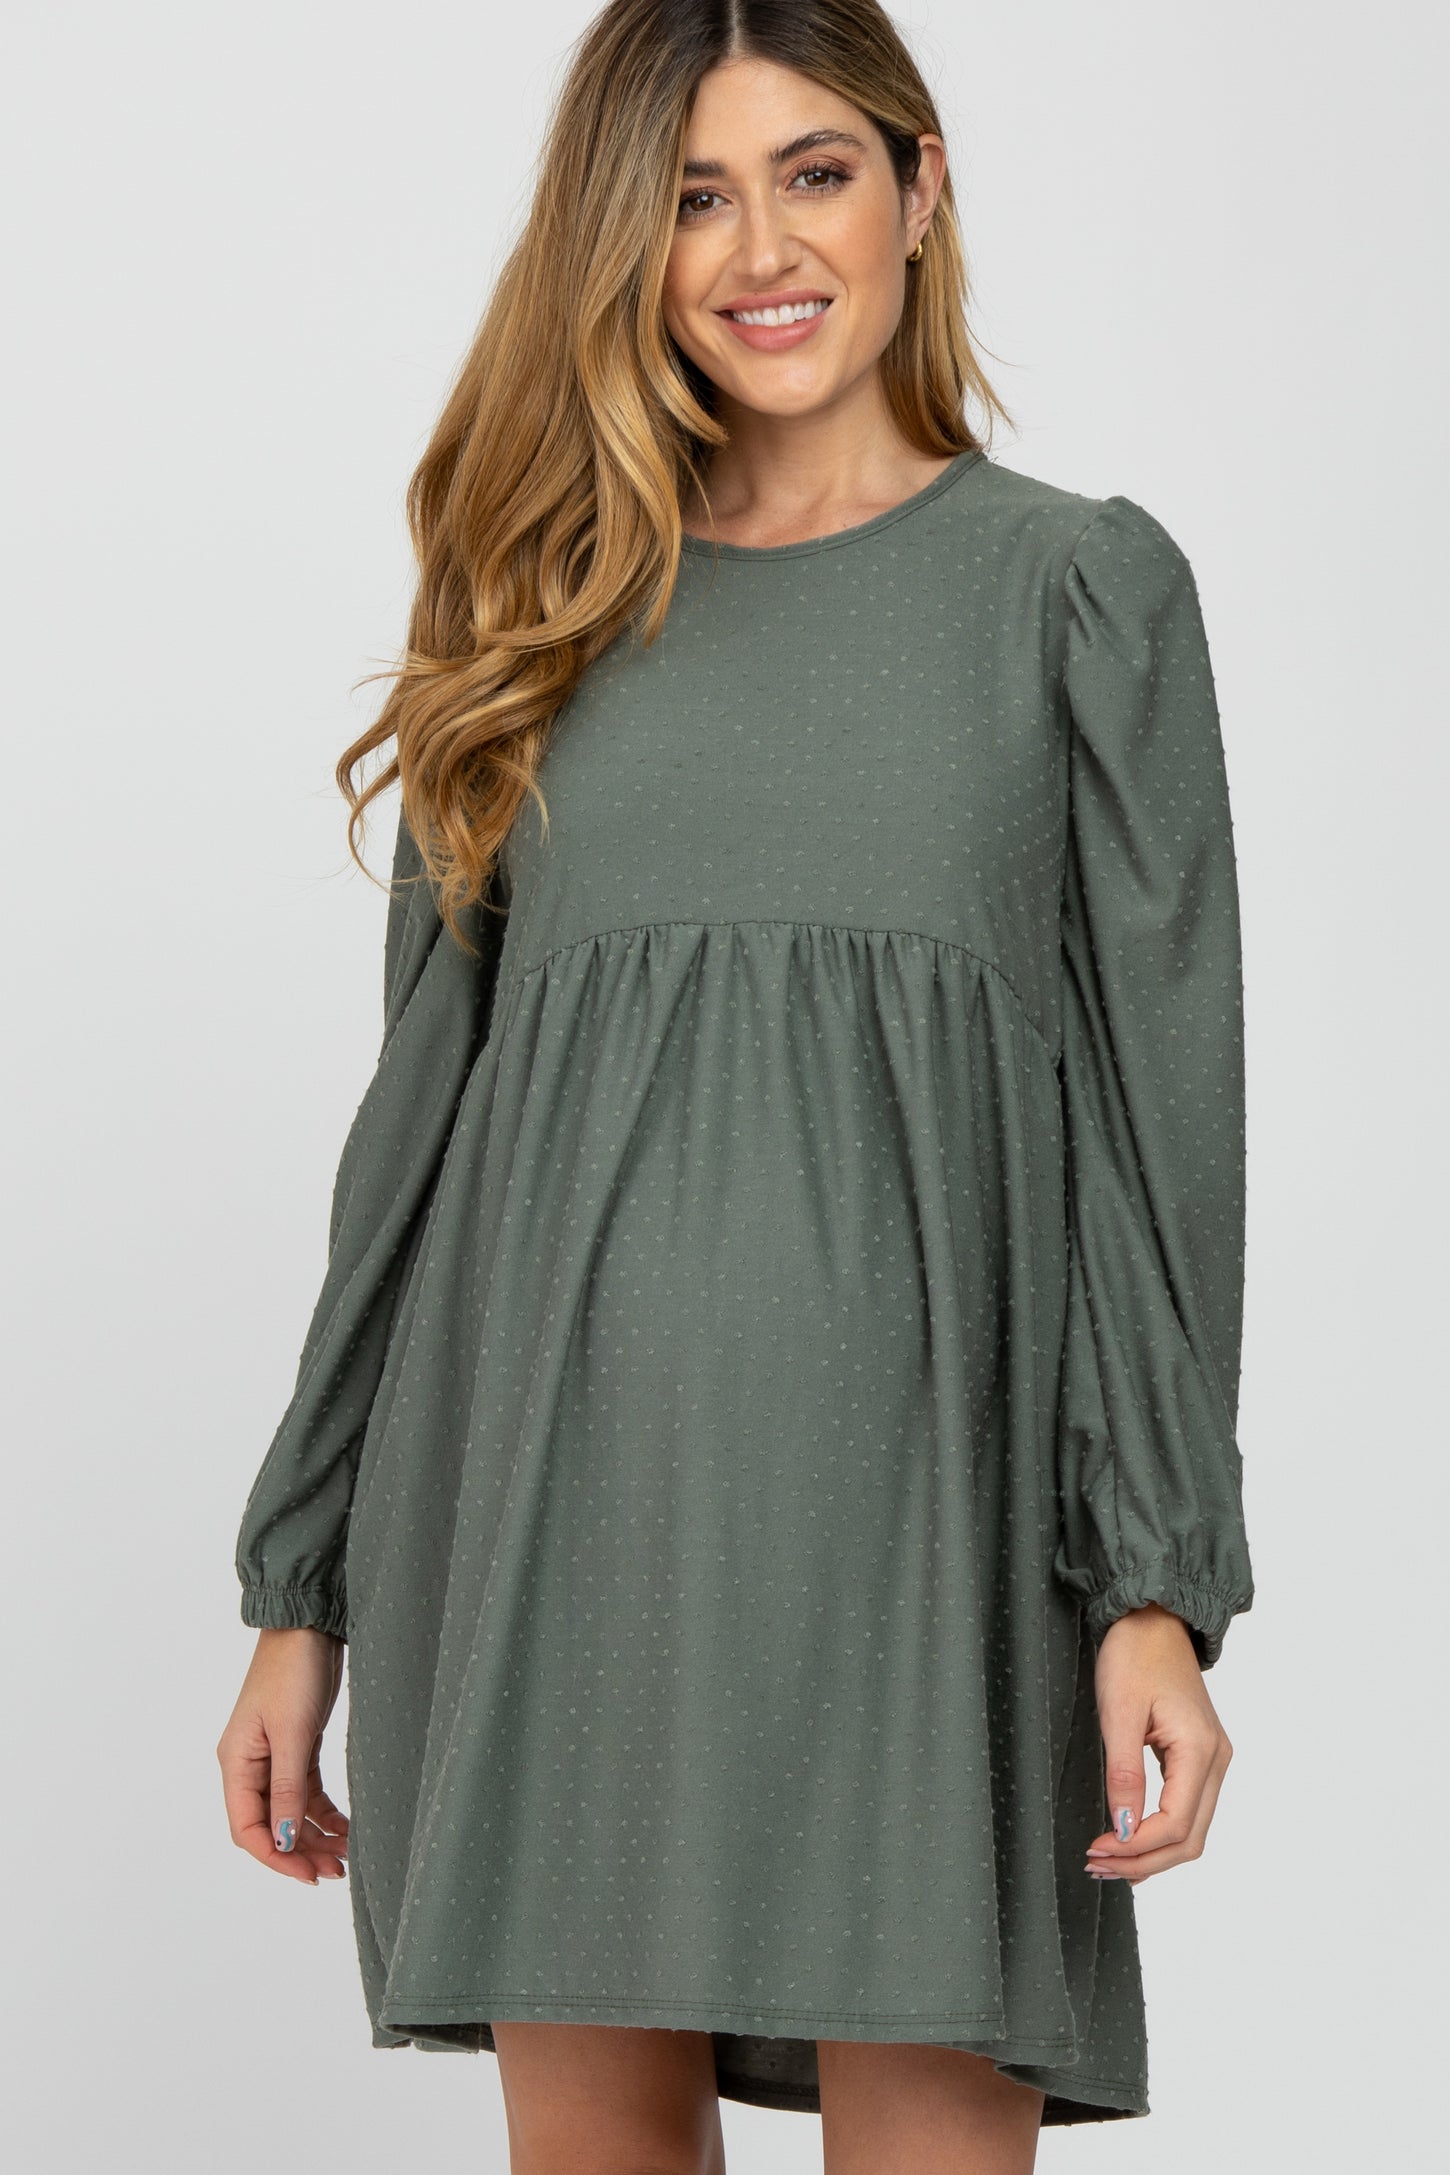 Olive Swiss Dot Maternity Dress